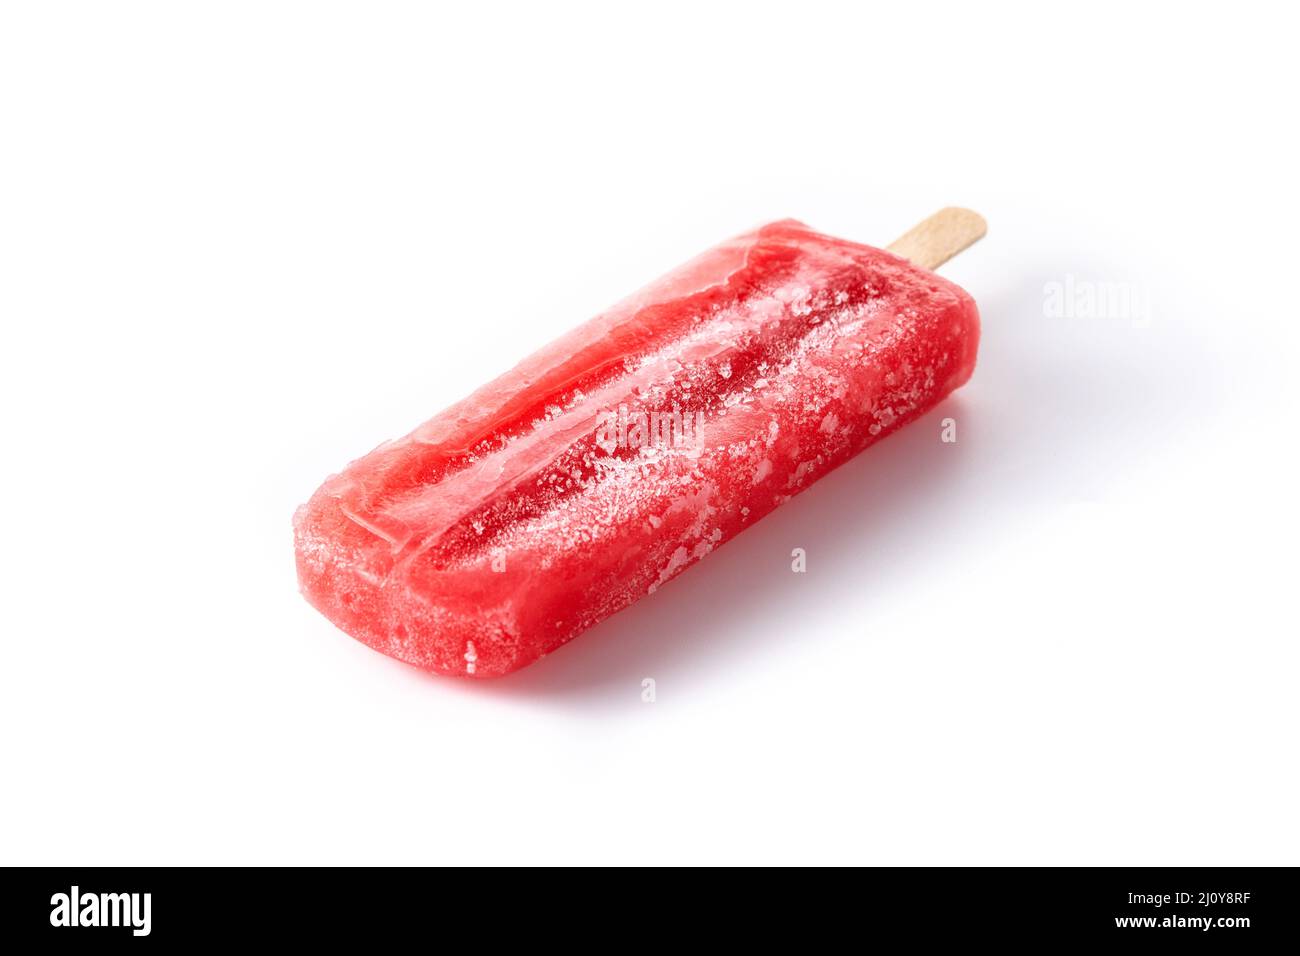 Strawberry popsicle isolated on white background Stock Photo